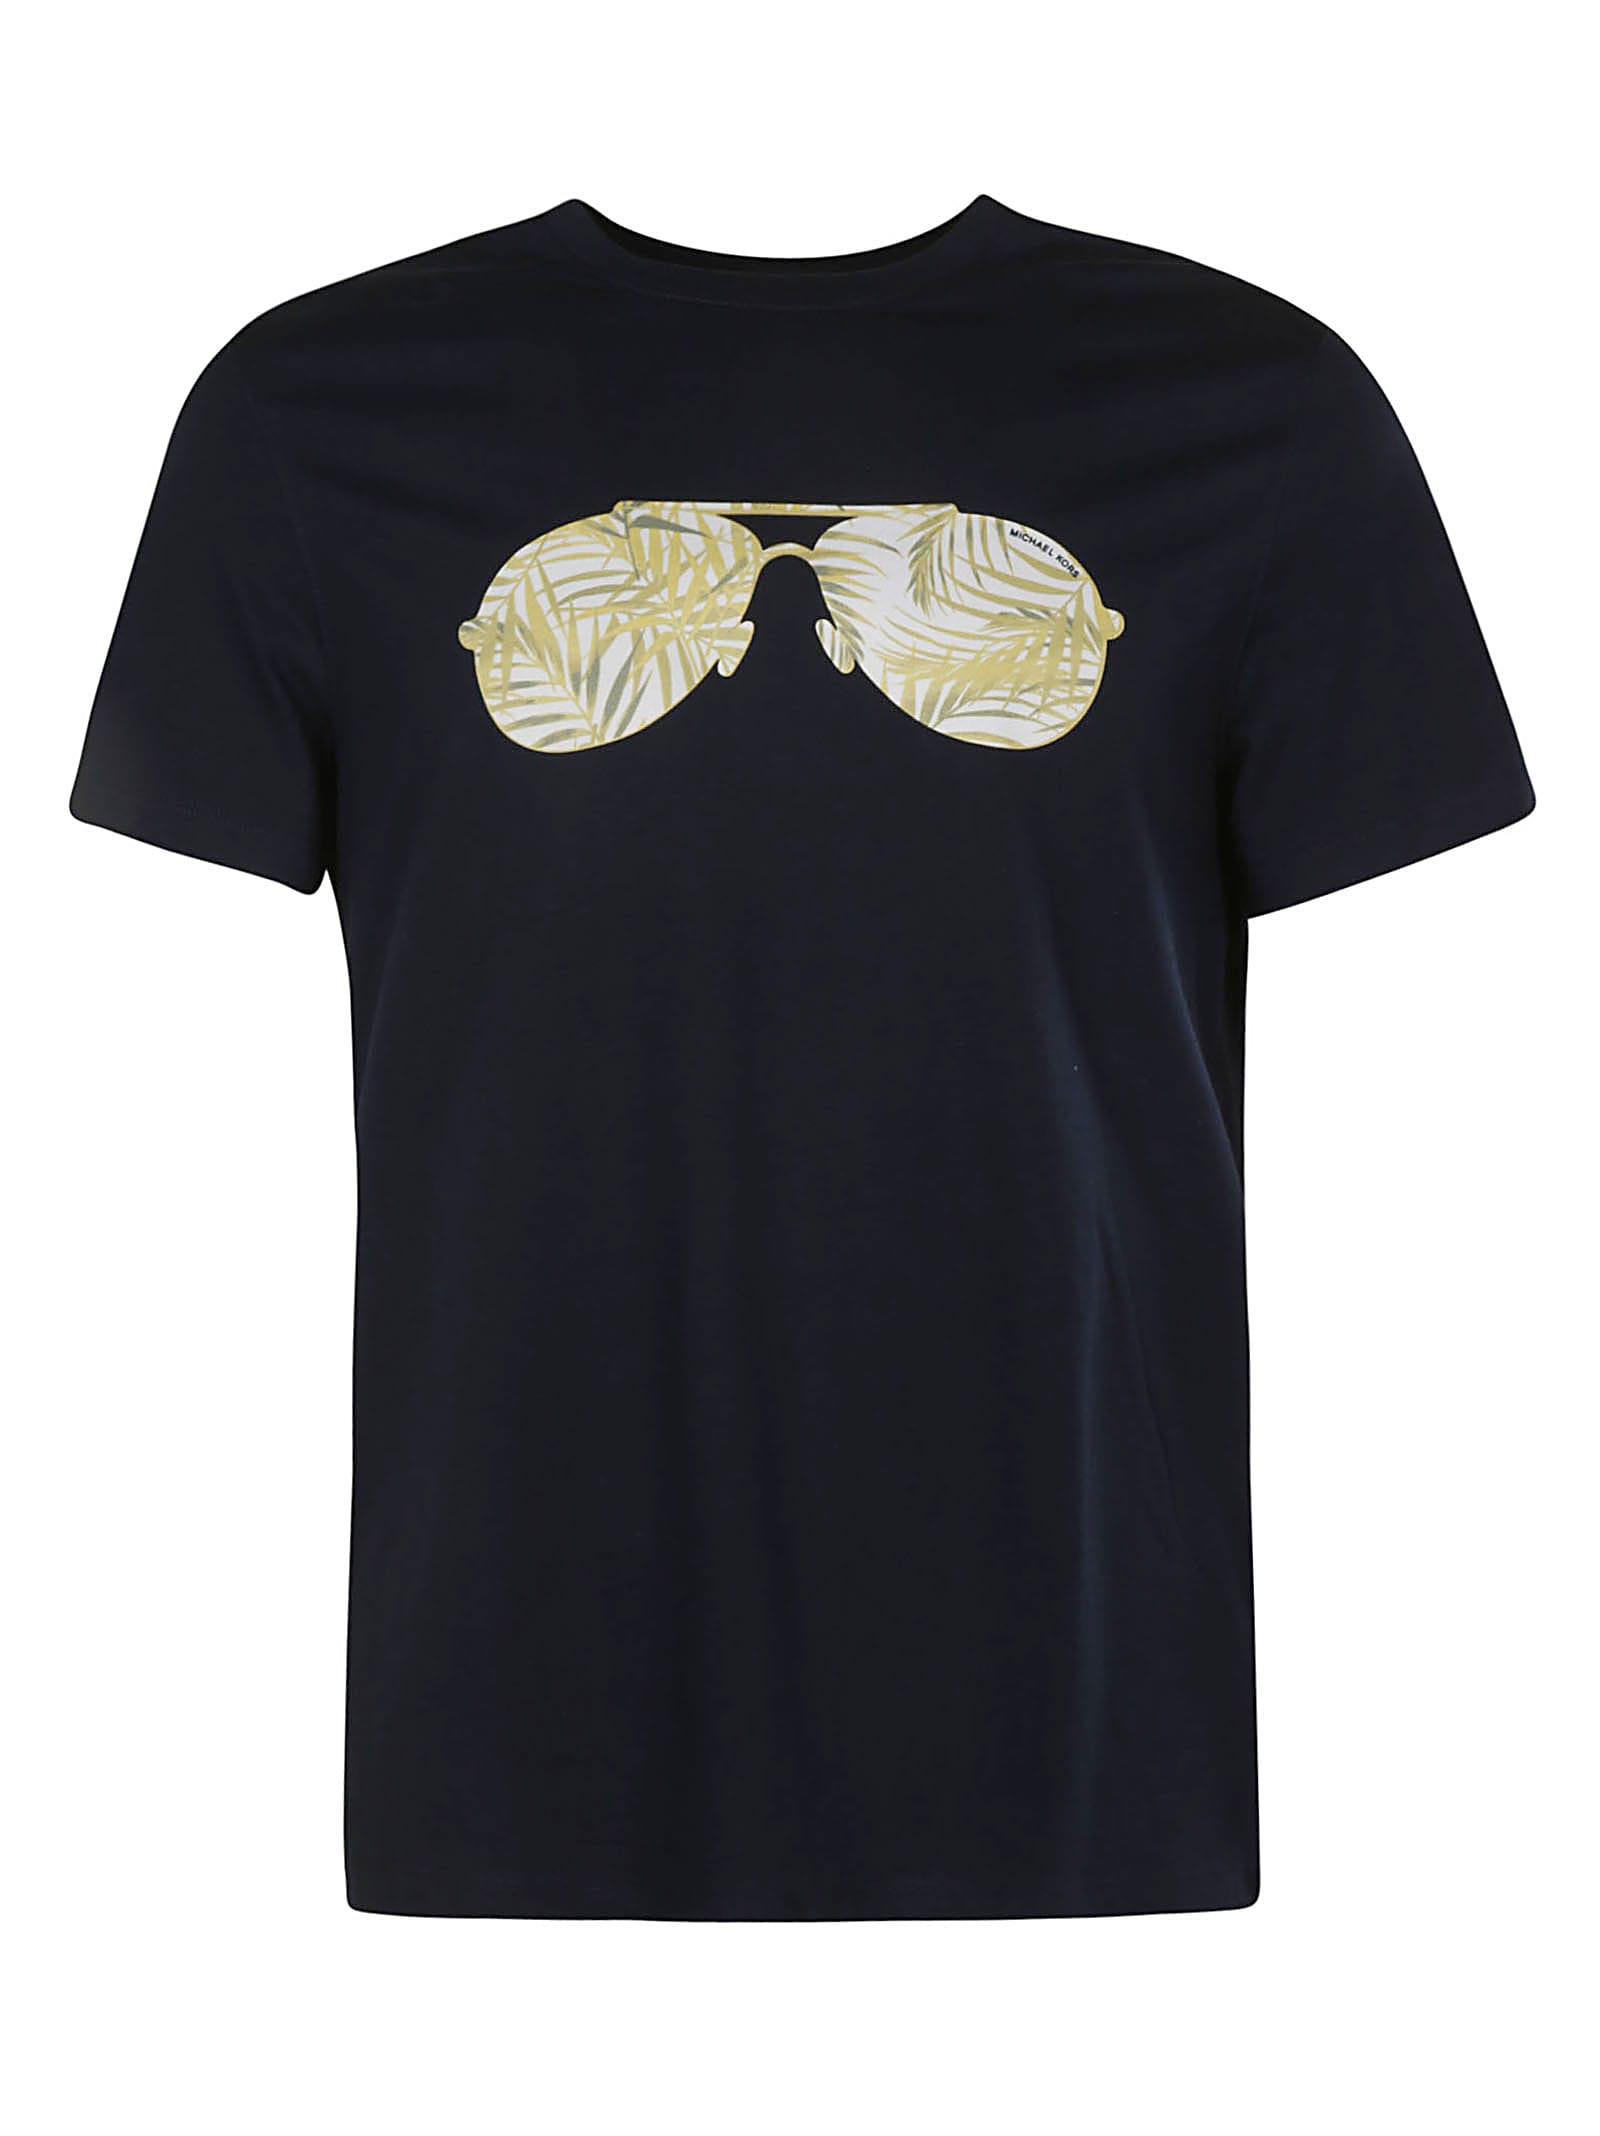 Michael Kors Sunglass Printed T-shirt